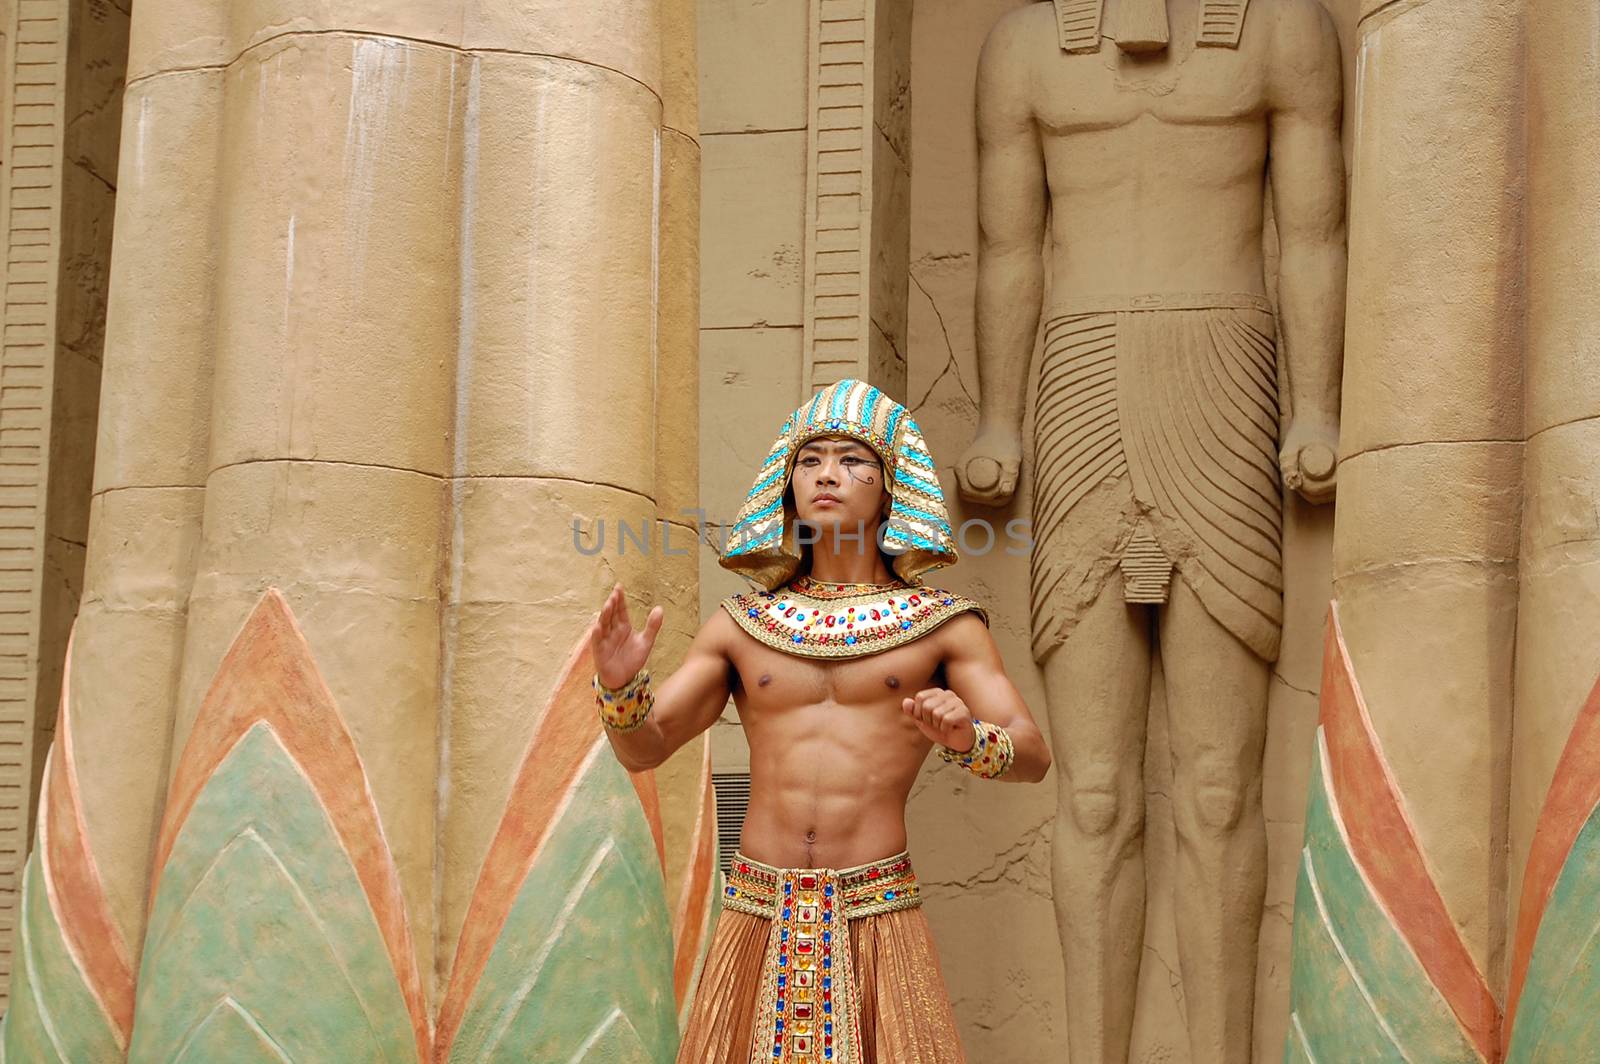 SENTOSA, SG - APRIL 5 - Universal Studios Singapore Egyptian performer on April 5, 2012 in Sentosa, Singapore.